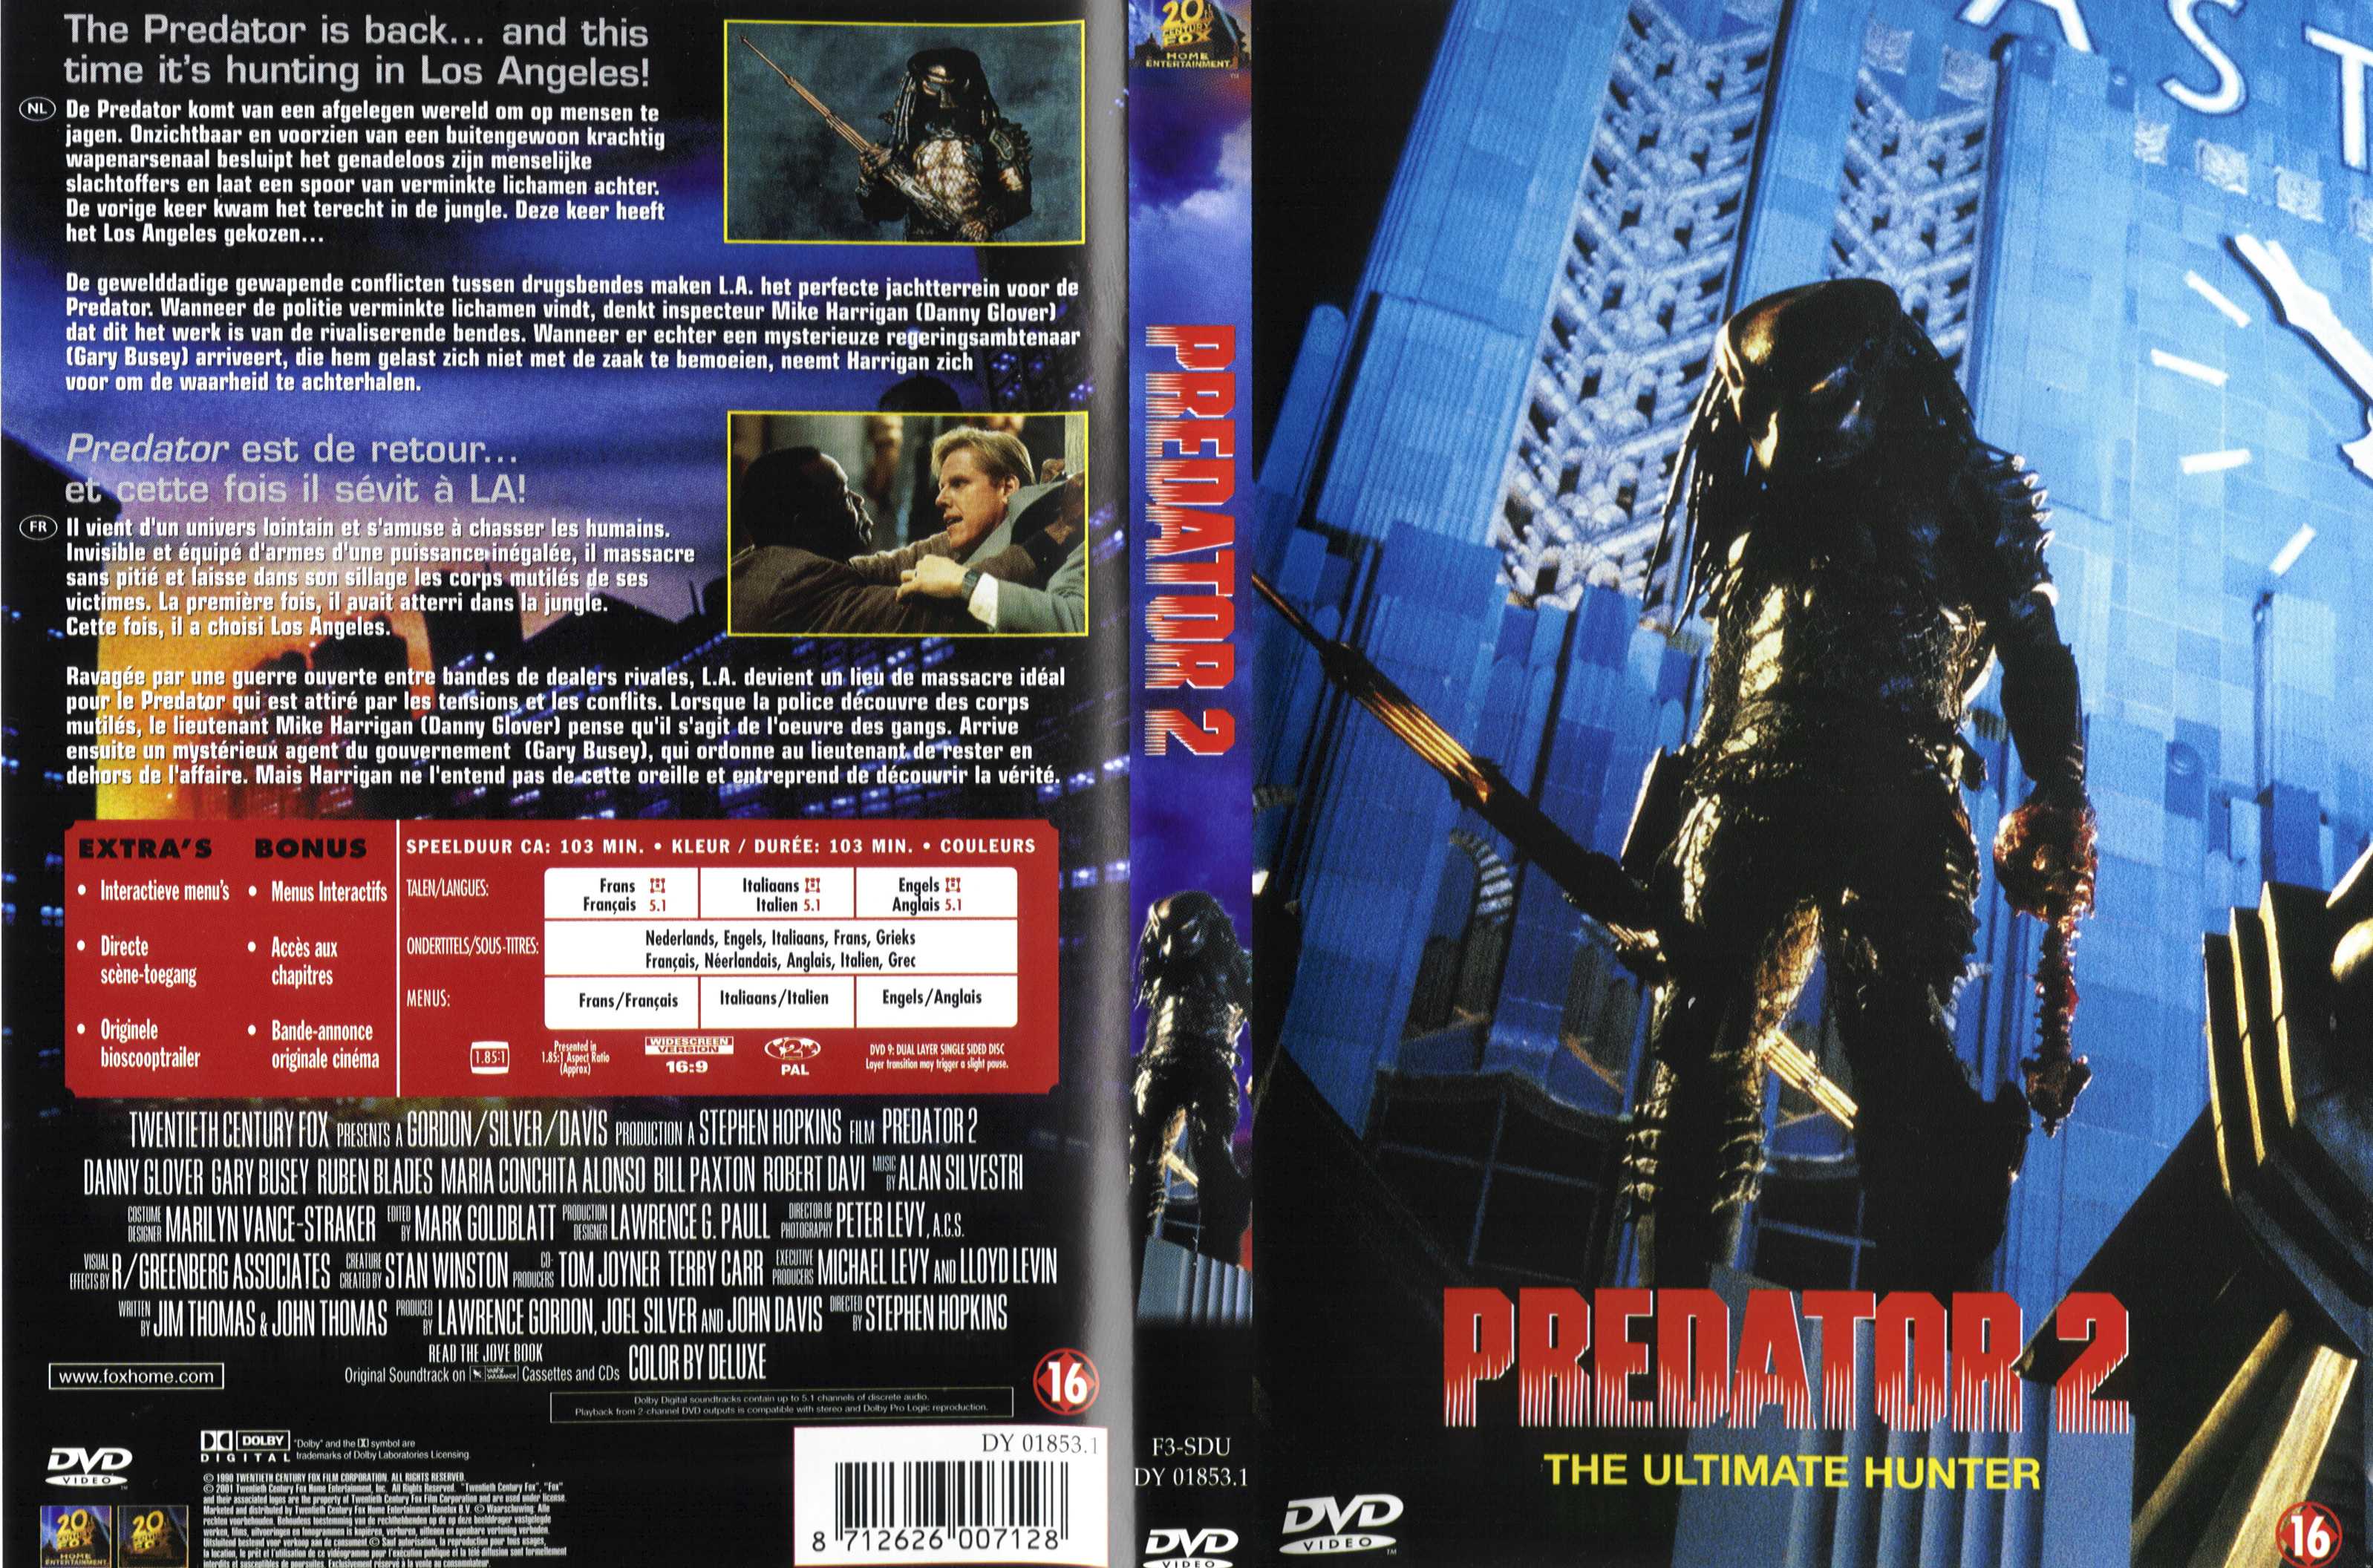 Jaquette DVD Predator 2